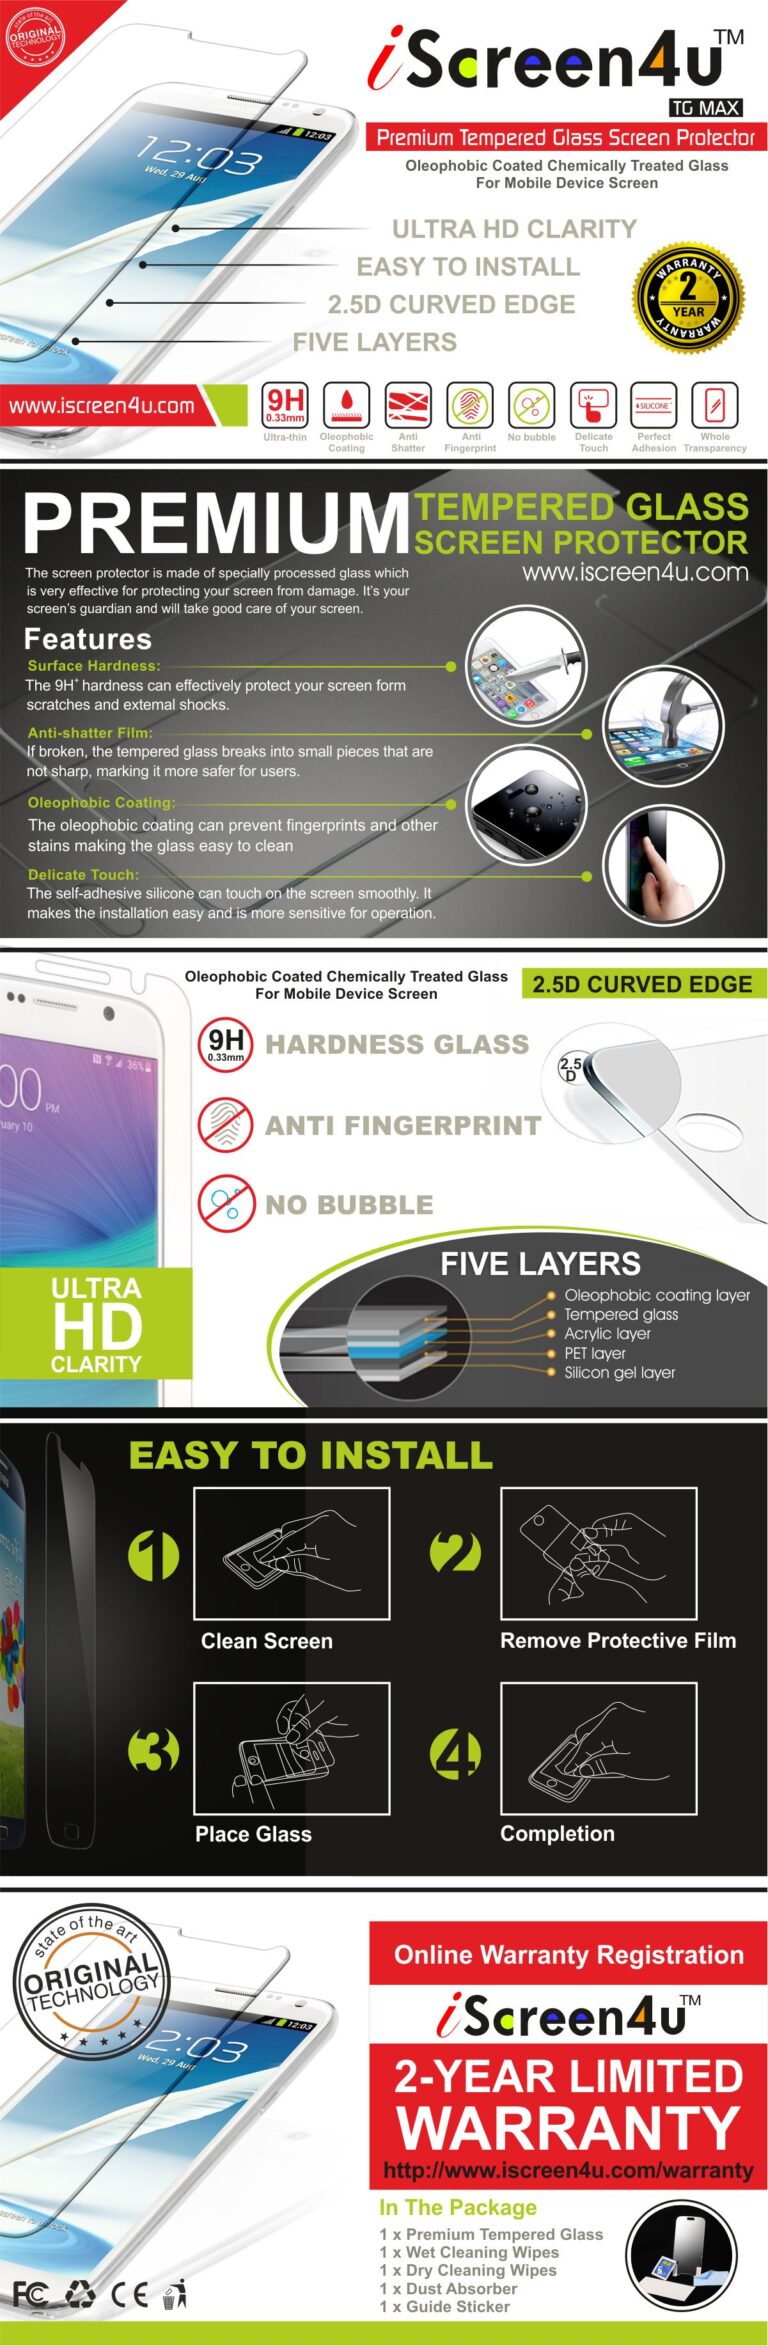 Portfolio: iScreen4u, Smart Touch, Glass, Brochure - Packaging Design - branding - Graphic Design - Print Design - Stationary Design - Brochure Design